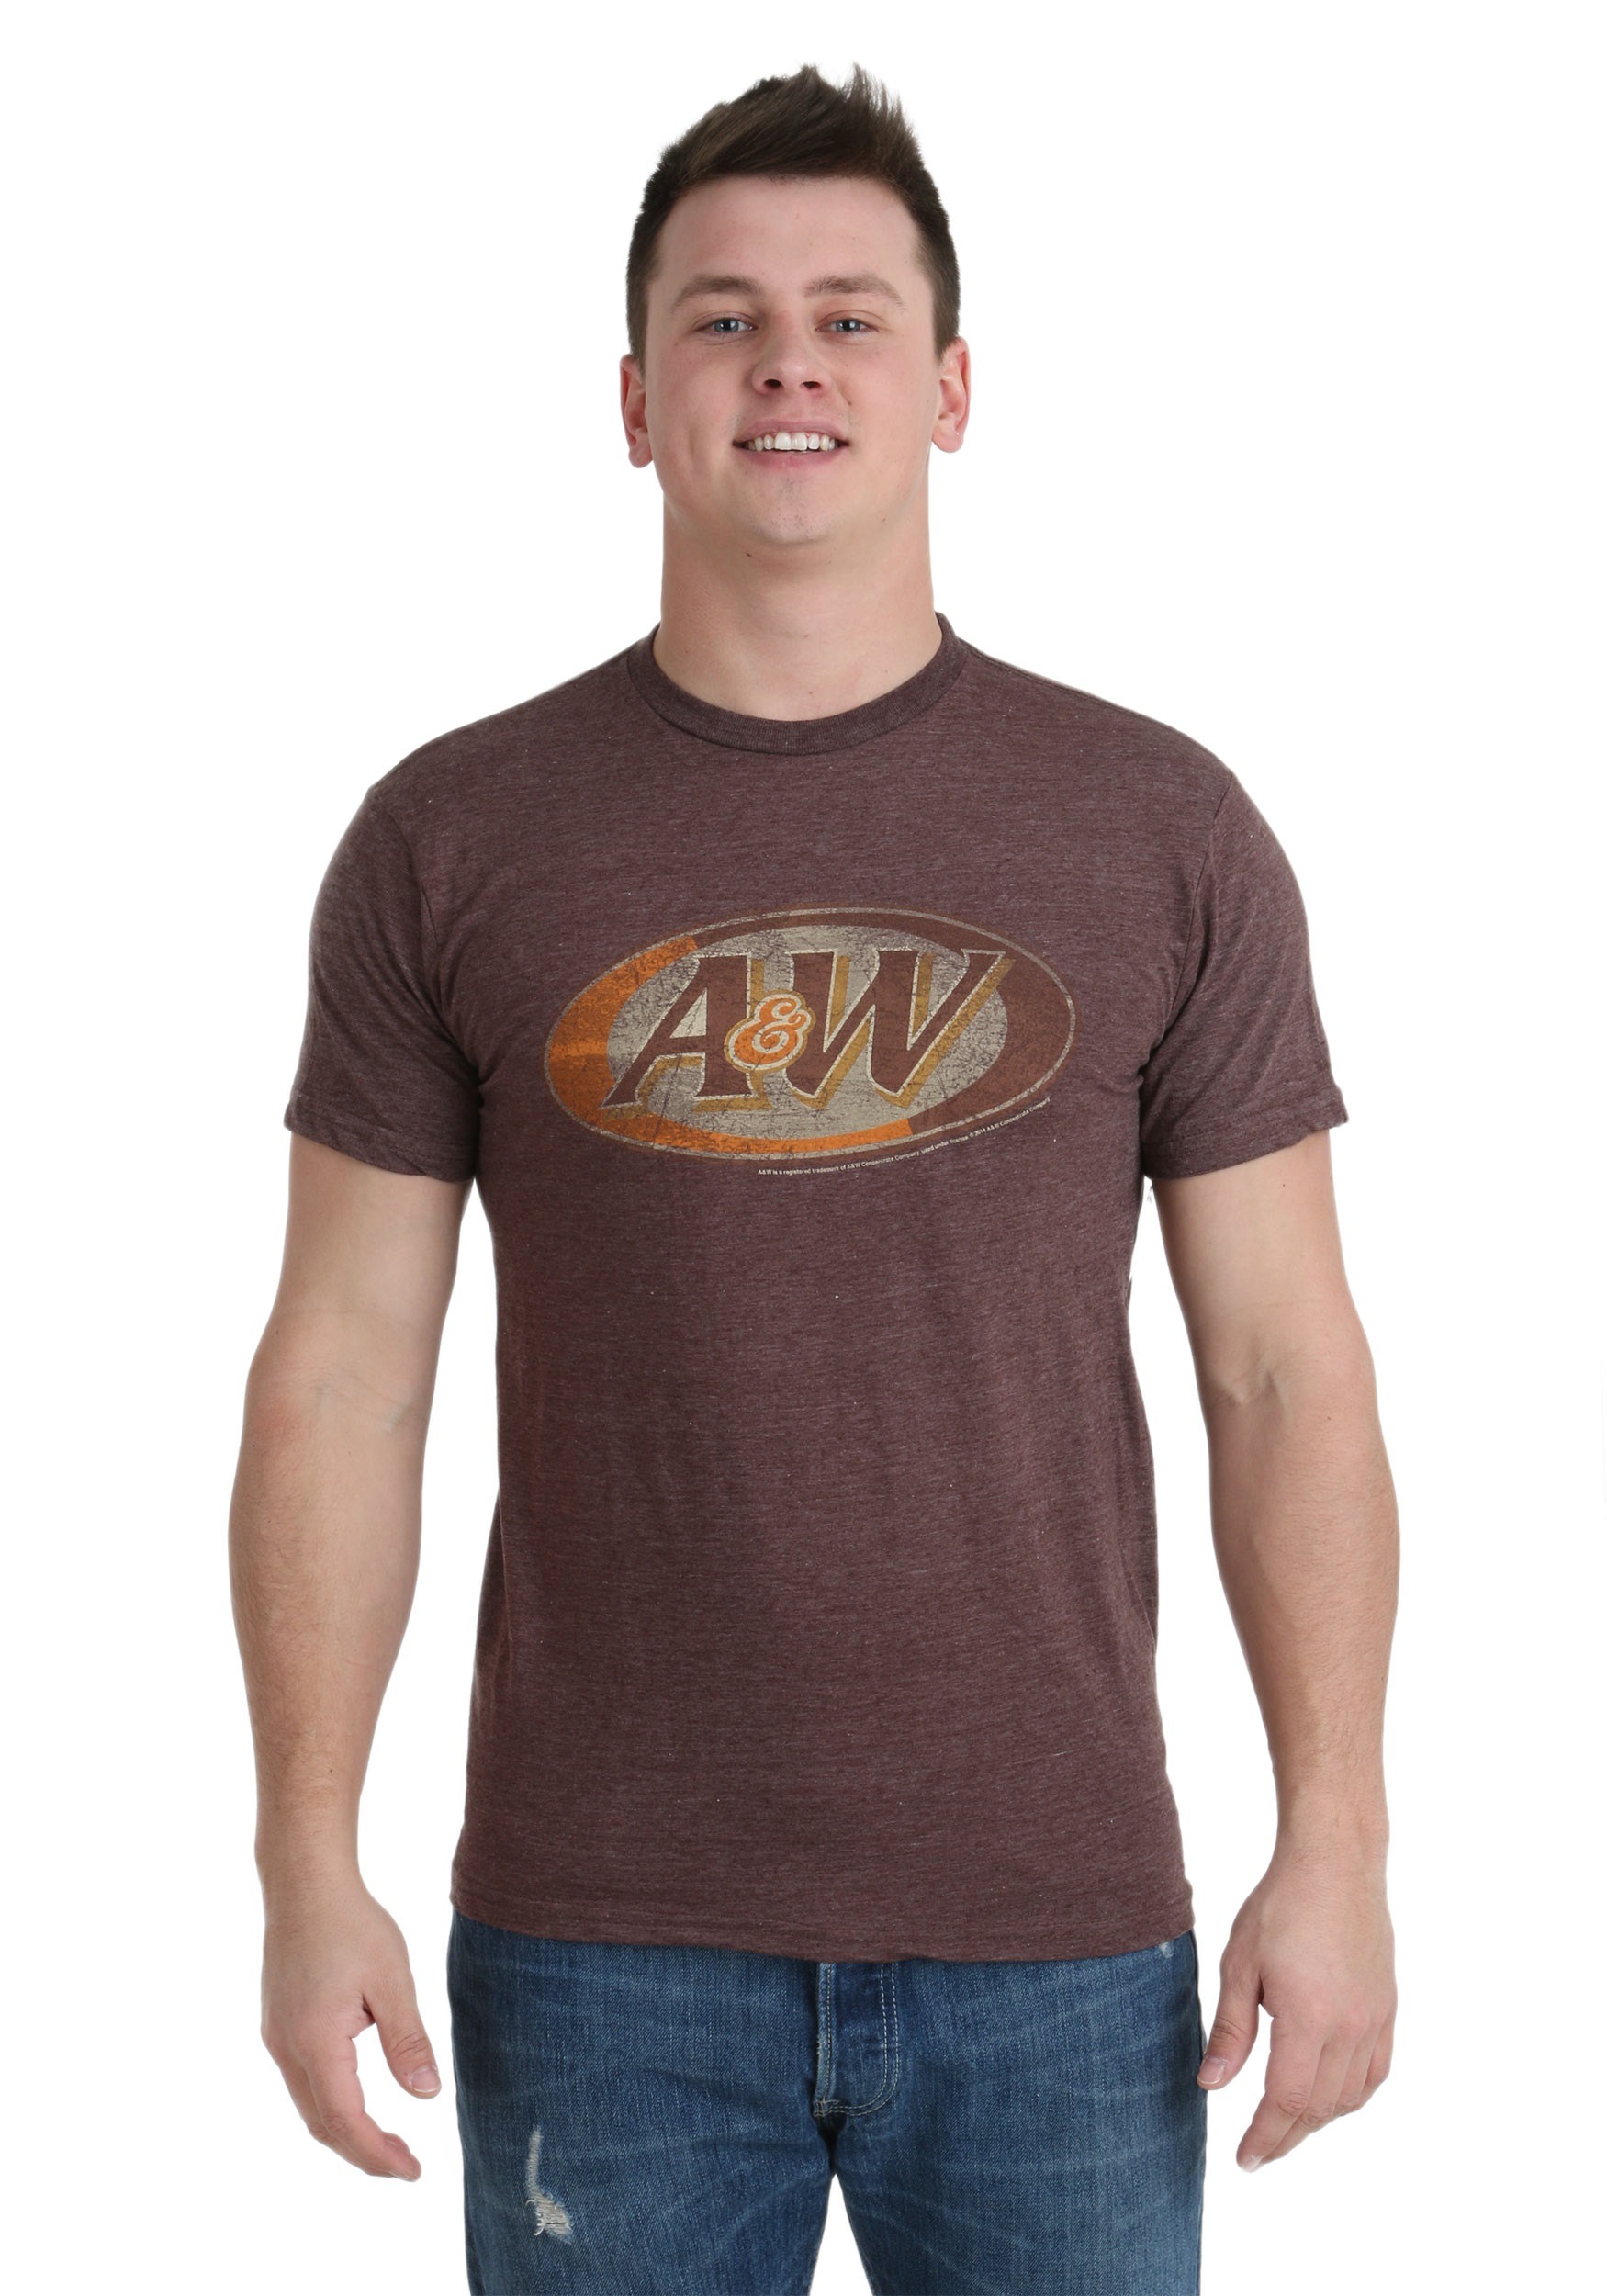 A&W Logo Men's T-Shirt